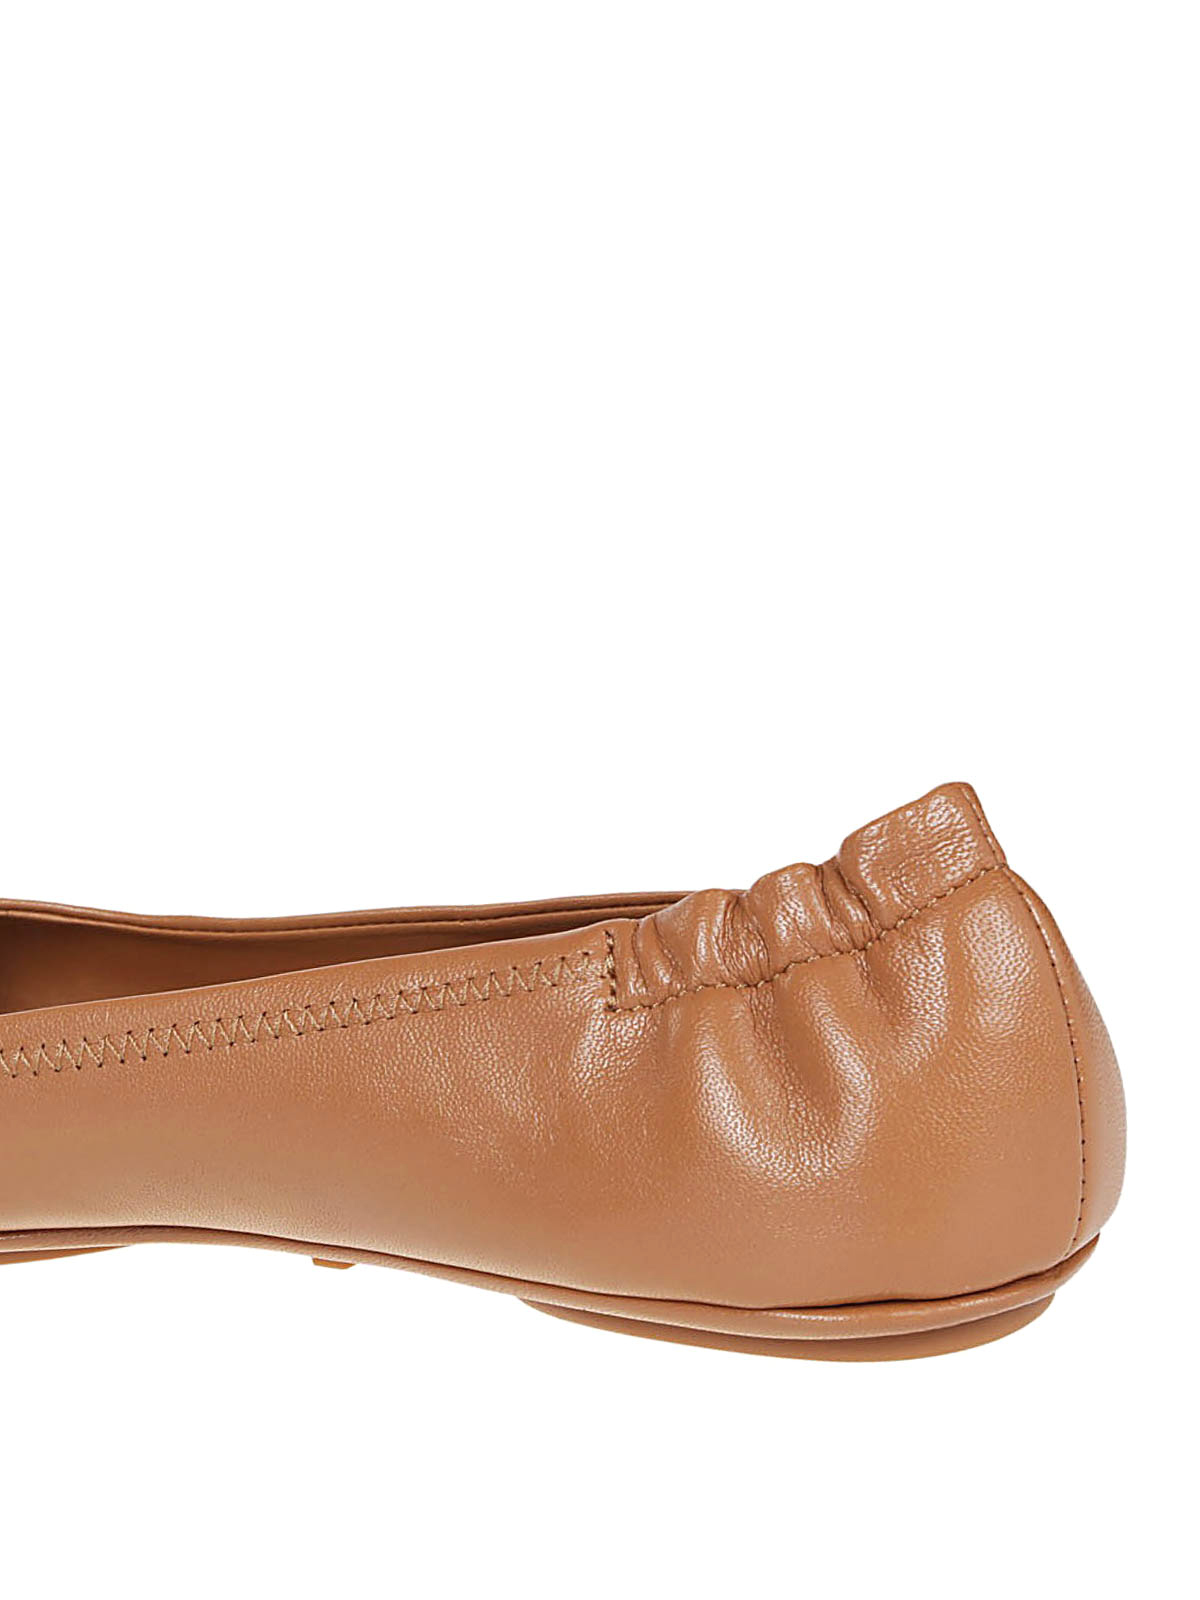 Flat shoes Tory Burch - Minnie tan leather folding flats - 50393232